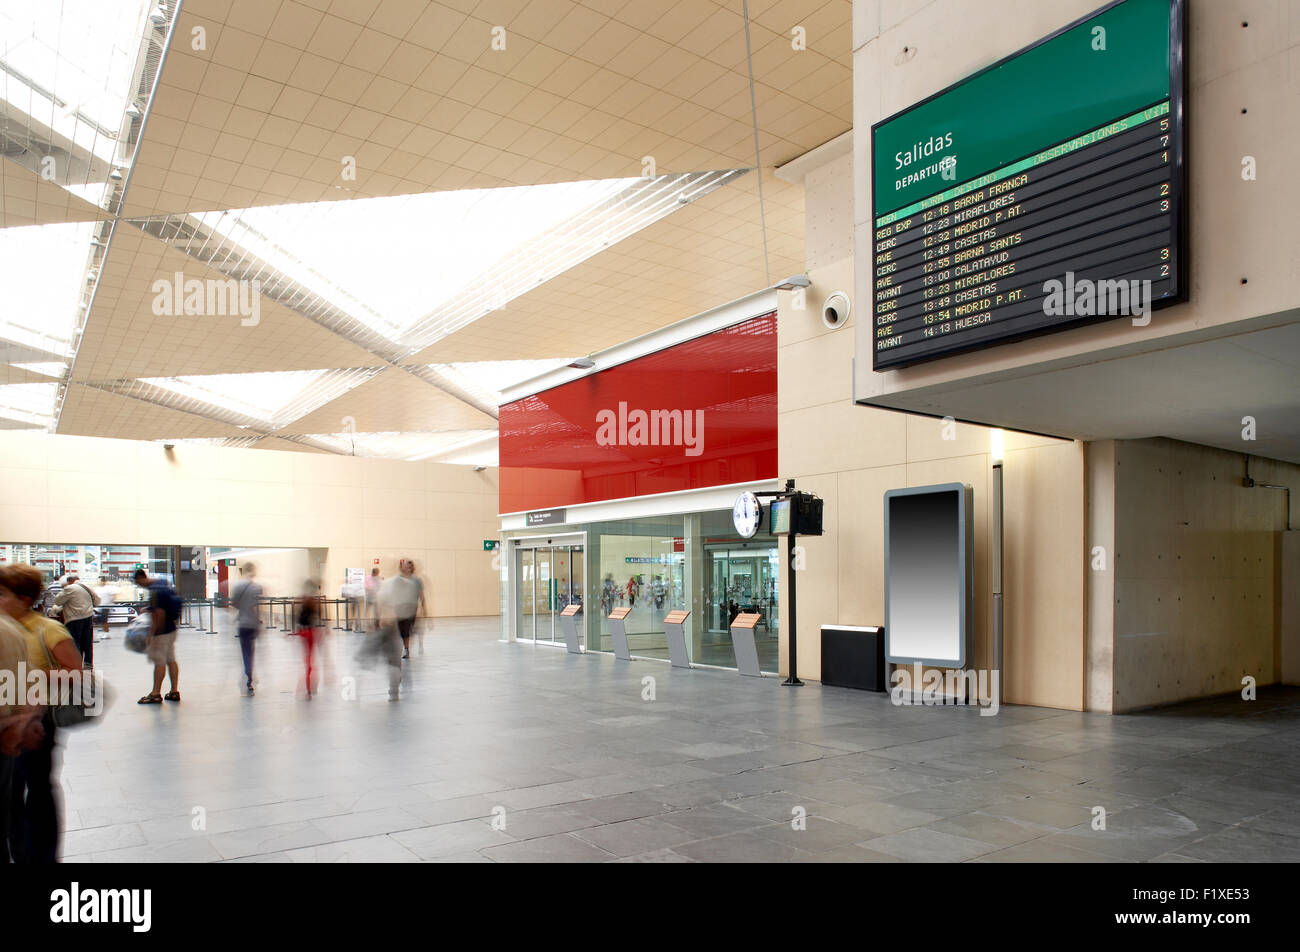 Abflüge Wegweiser am Bahnhof Bahnhofshalle horizontale Stockfoto